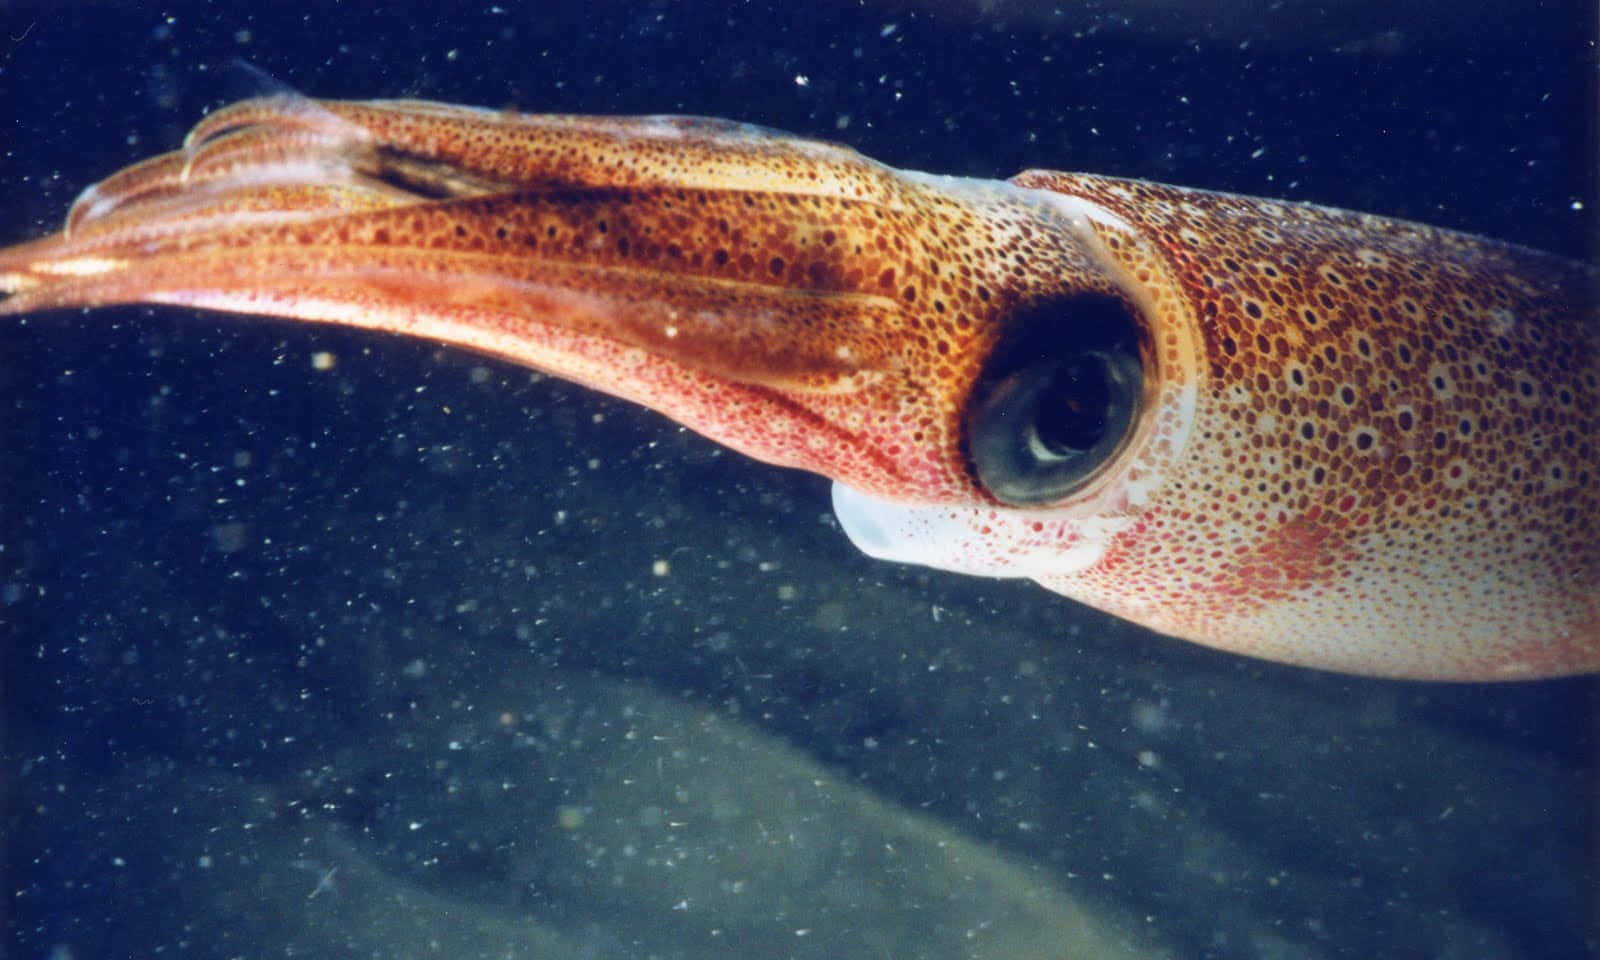 A close-up of a Squids's tentacles